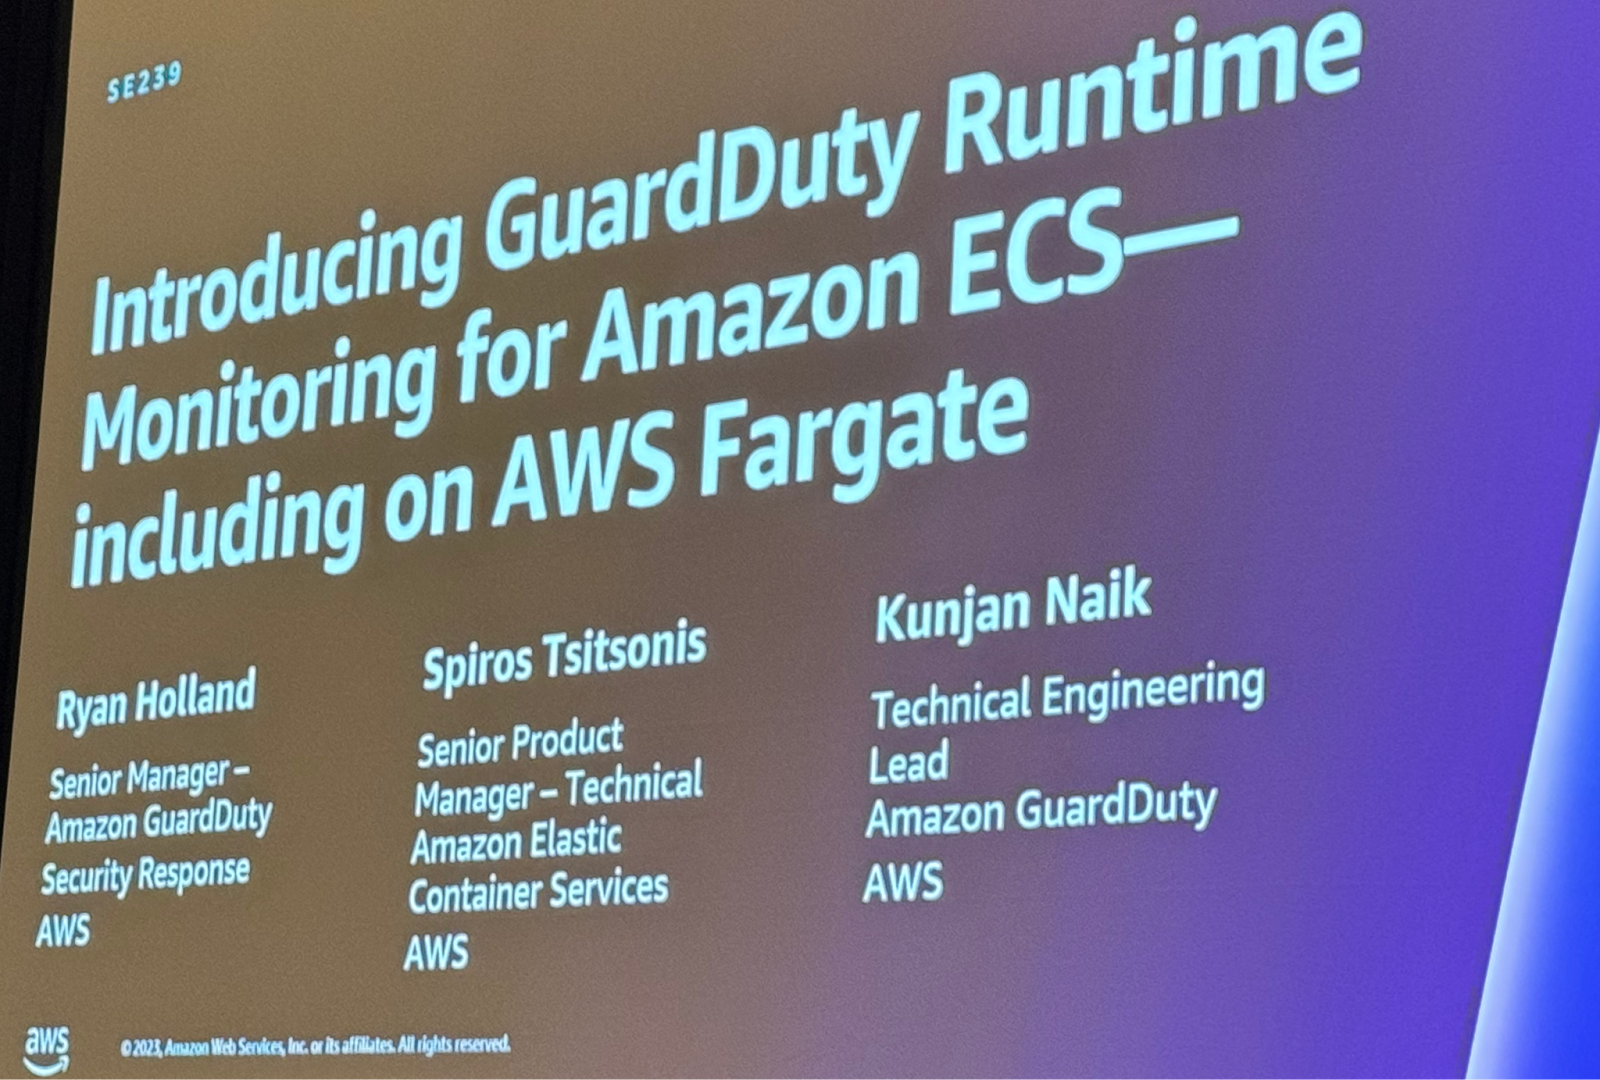 Introducing GuardDuty ECS Runtime Monitoring, including AWS Fargate